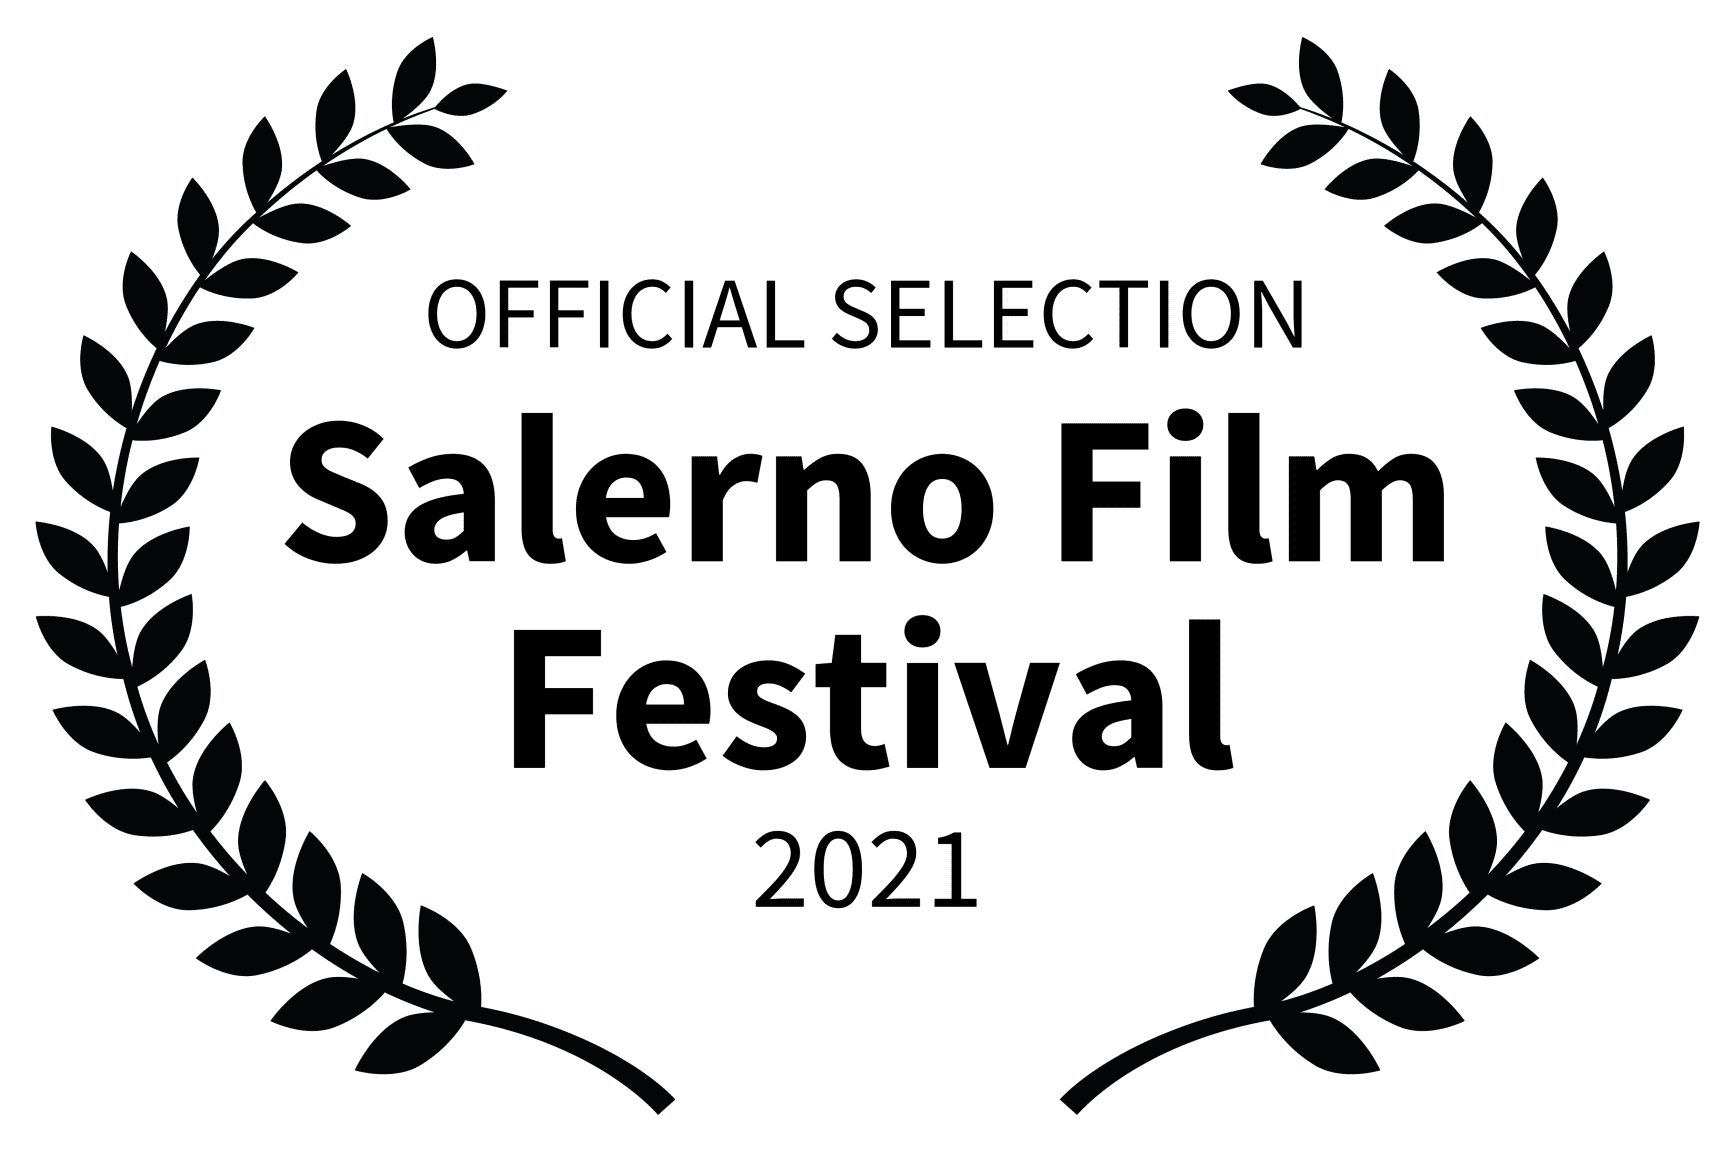 OFFICIAL SELECTION - Salerno Film Festival - 2021 (1)